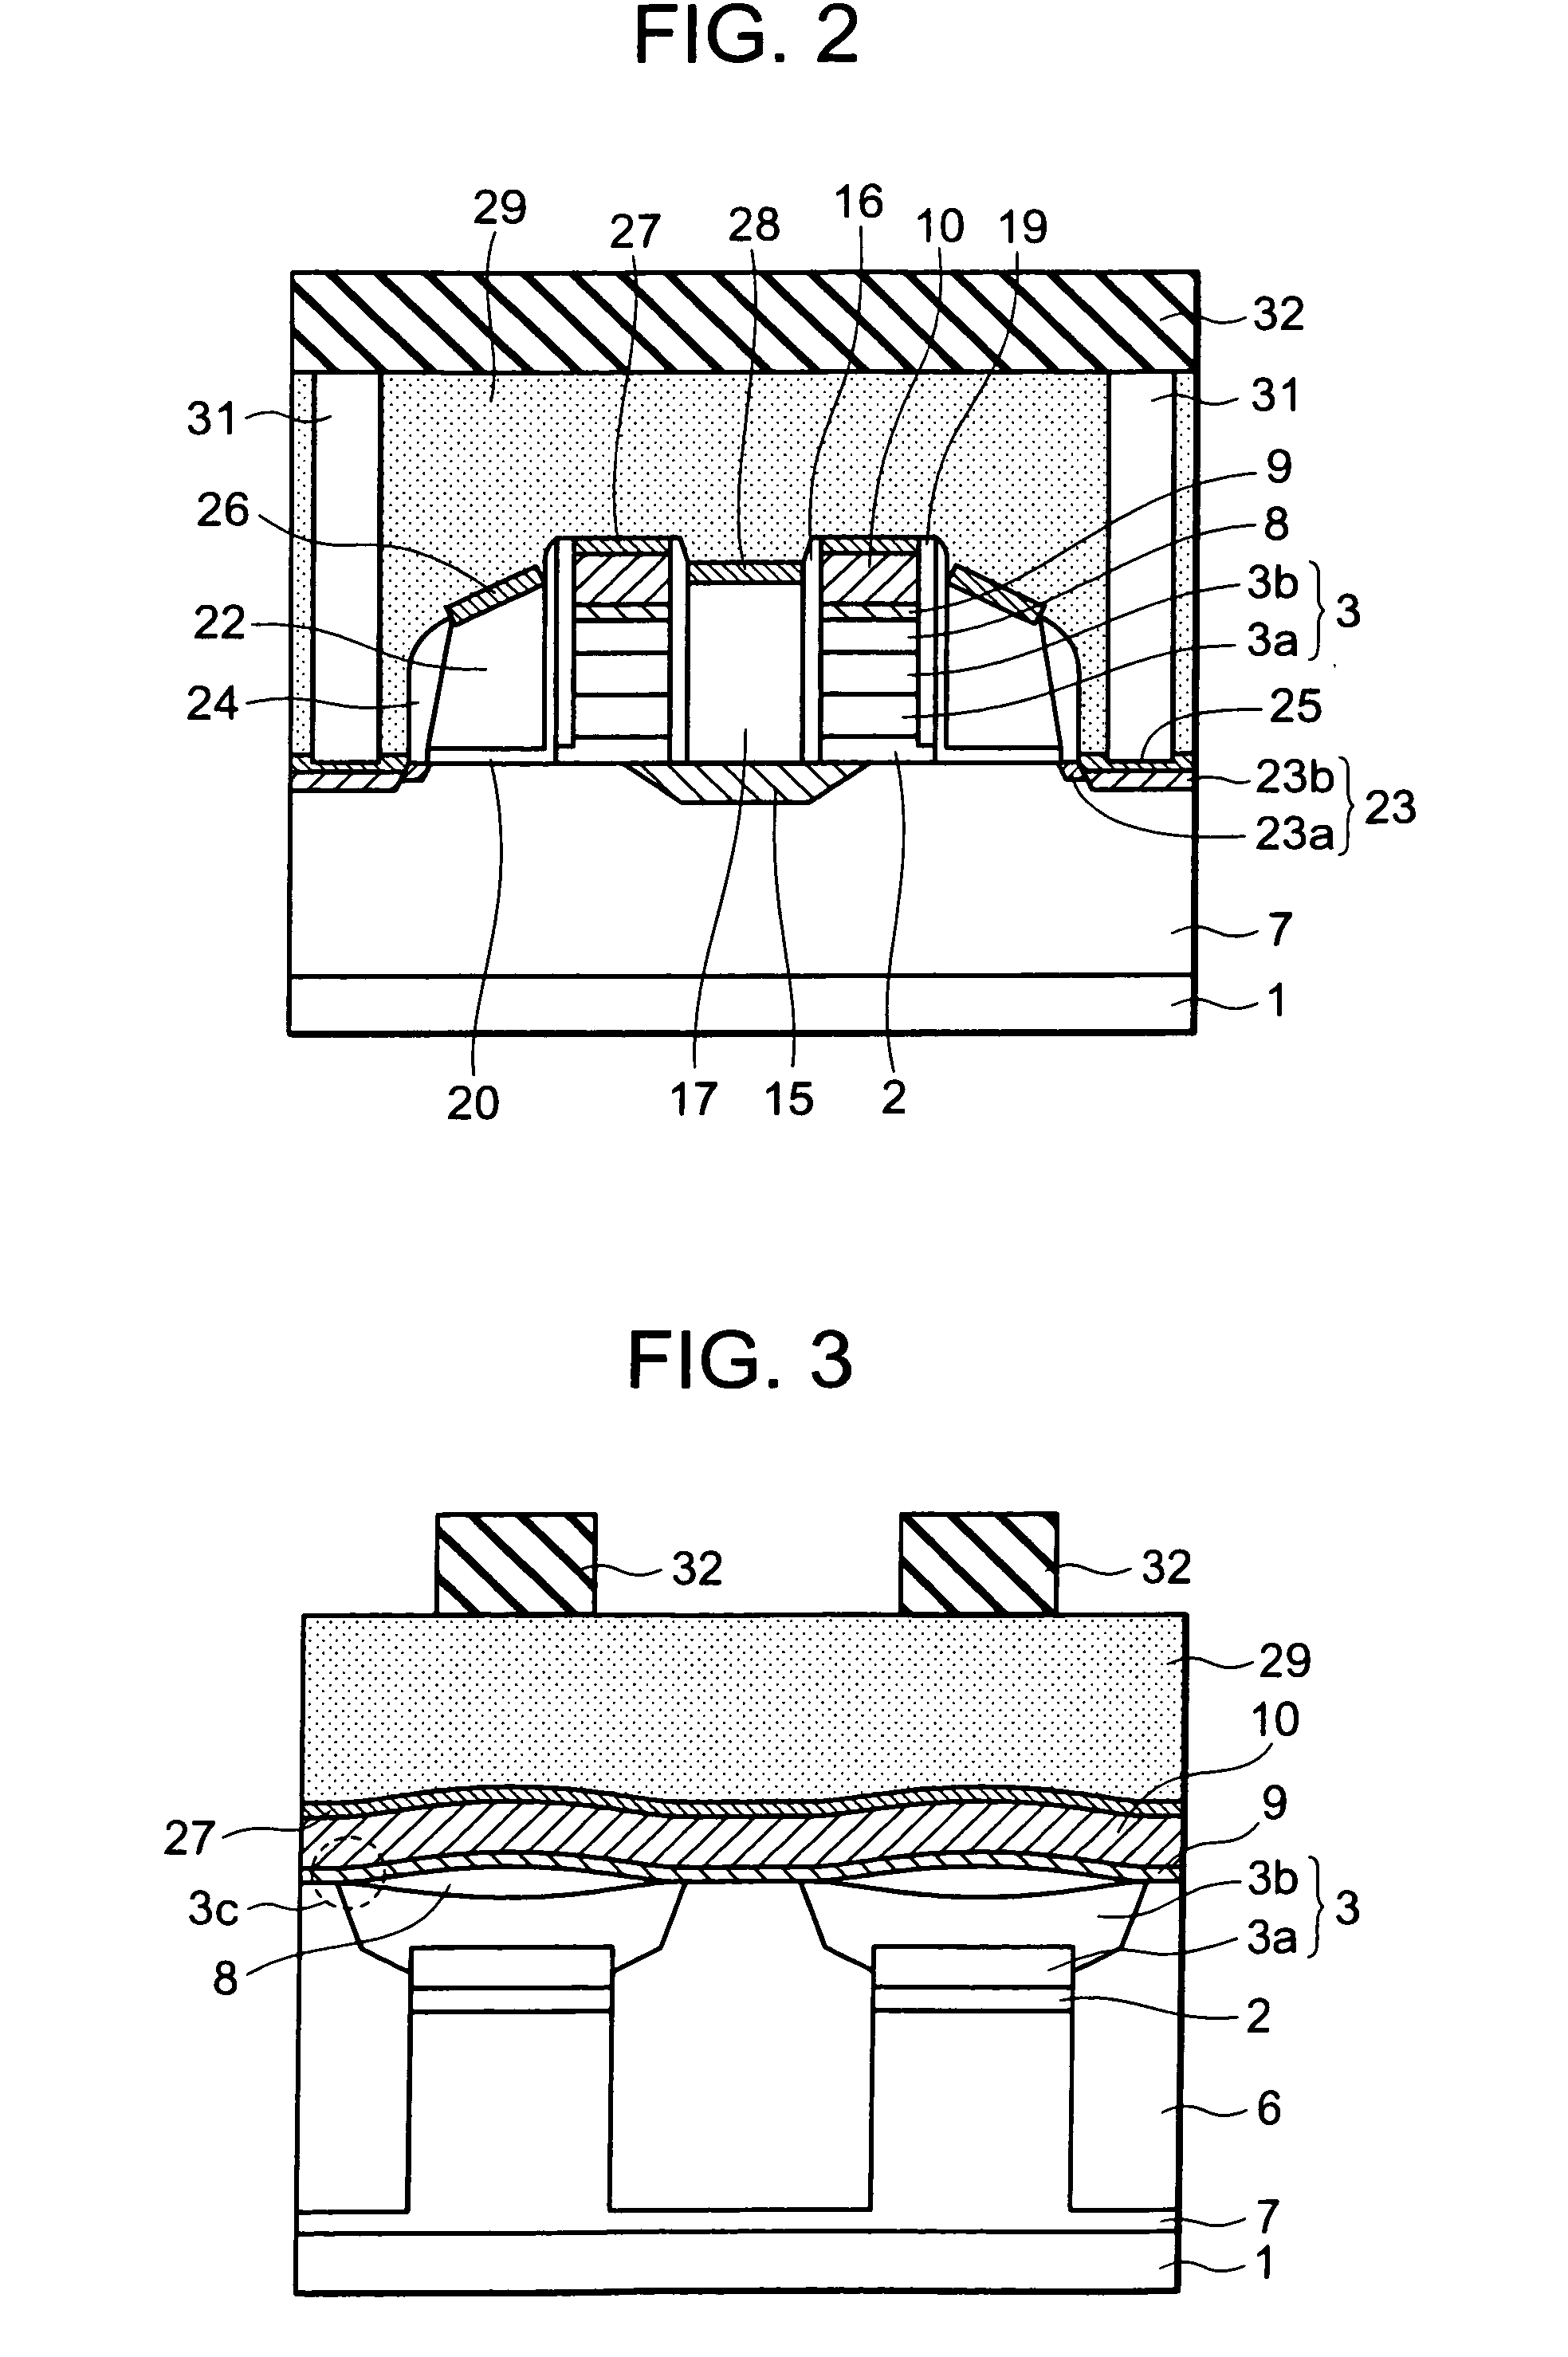 Non-volatile semiconductor memory device having an erasing gate